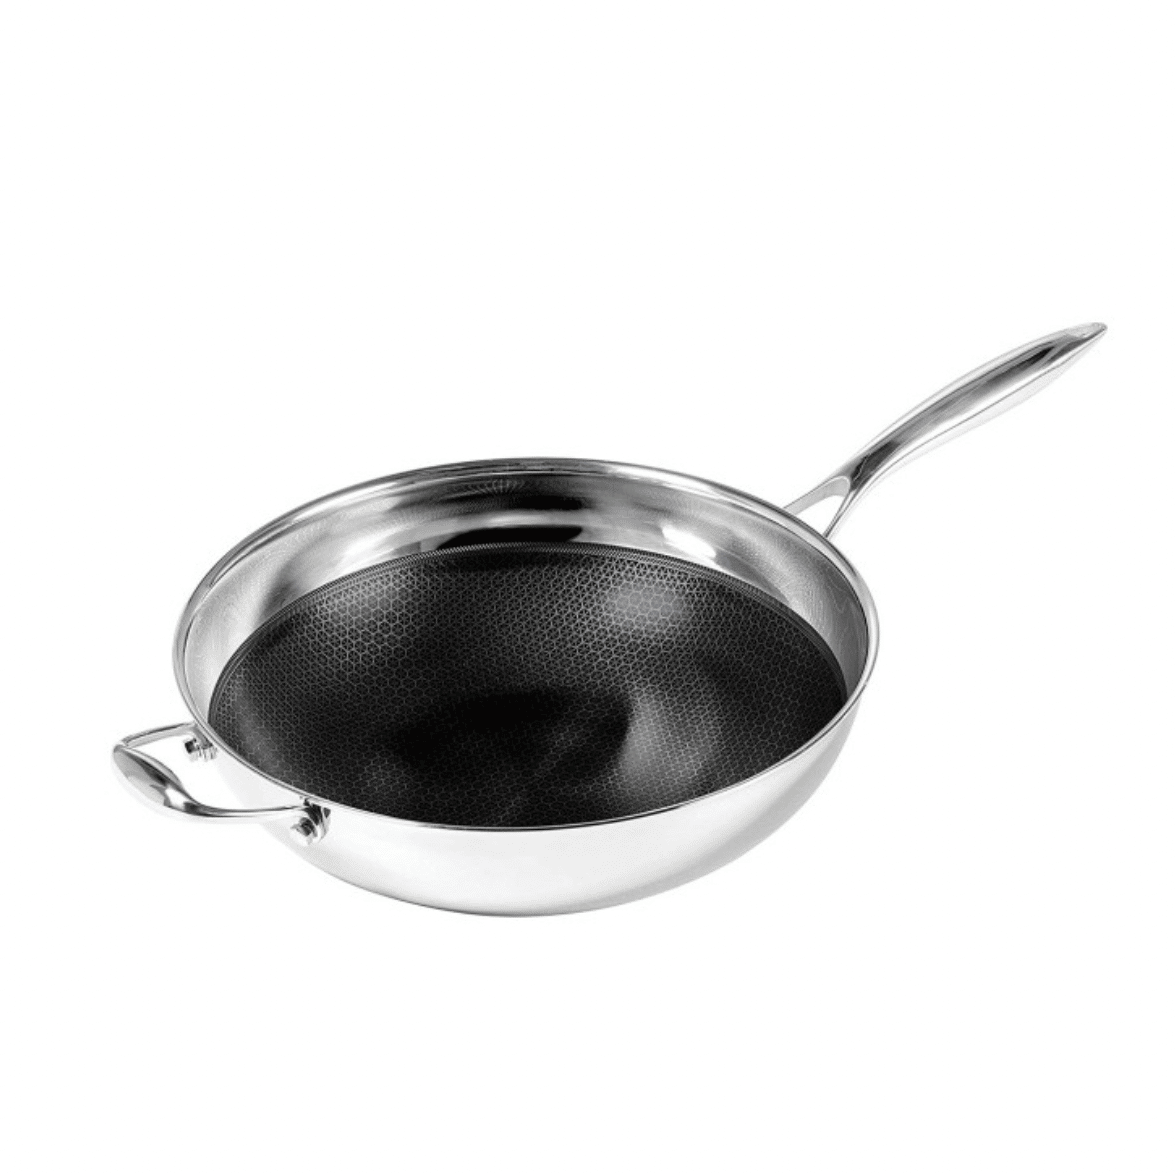 Hexclad Cookware Cooking Pan Non Stick Frying Ramen Hot Soup